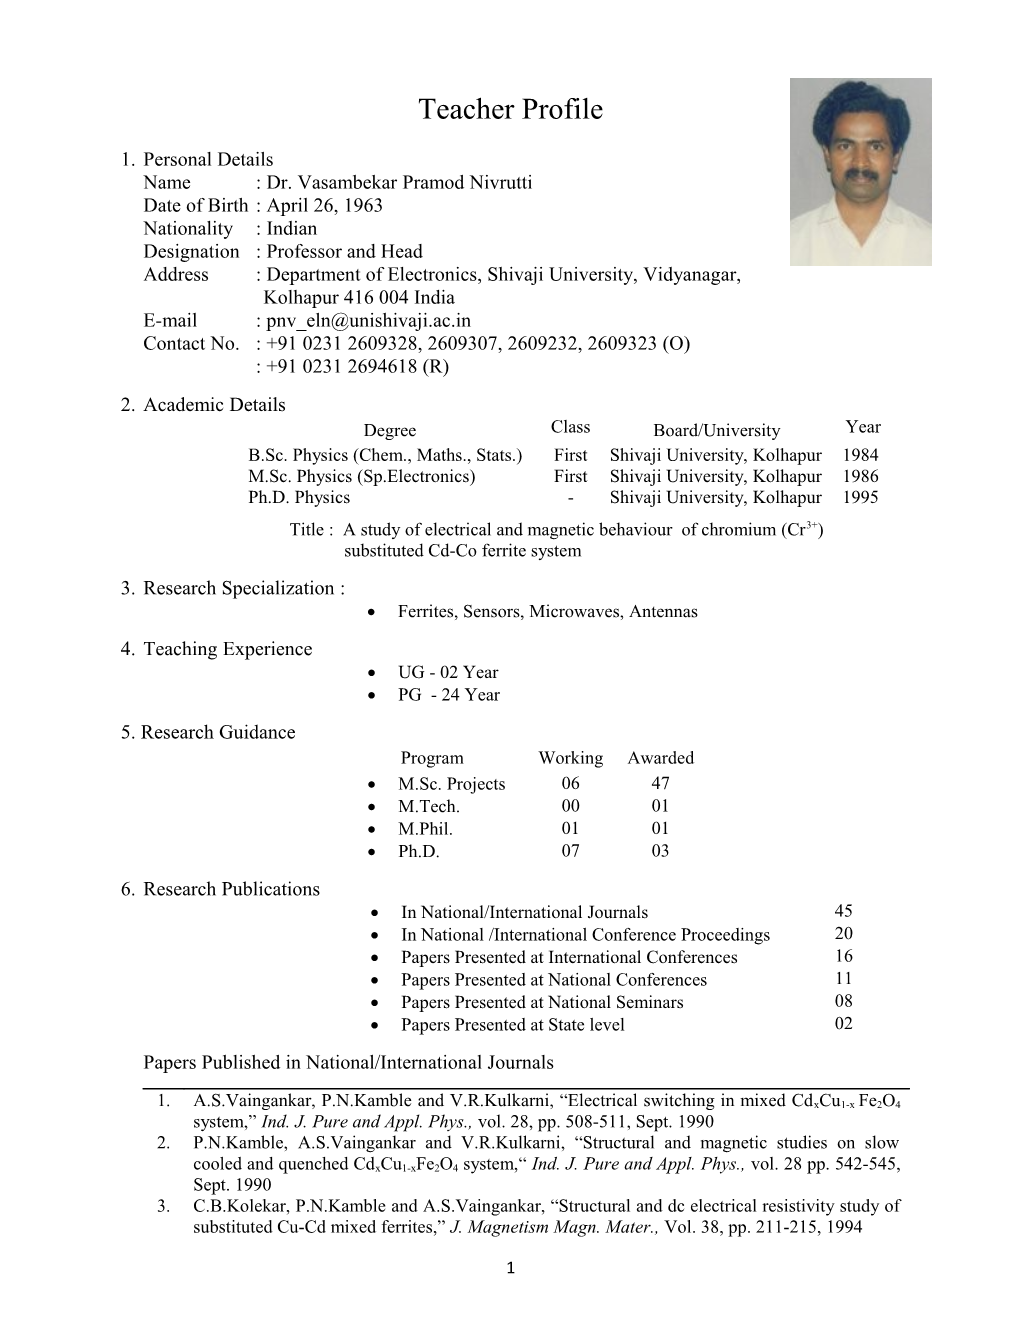 Name : Dr. Vasambekar Pramod Nivrutti